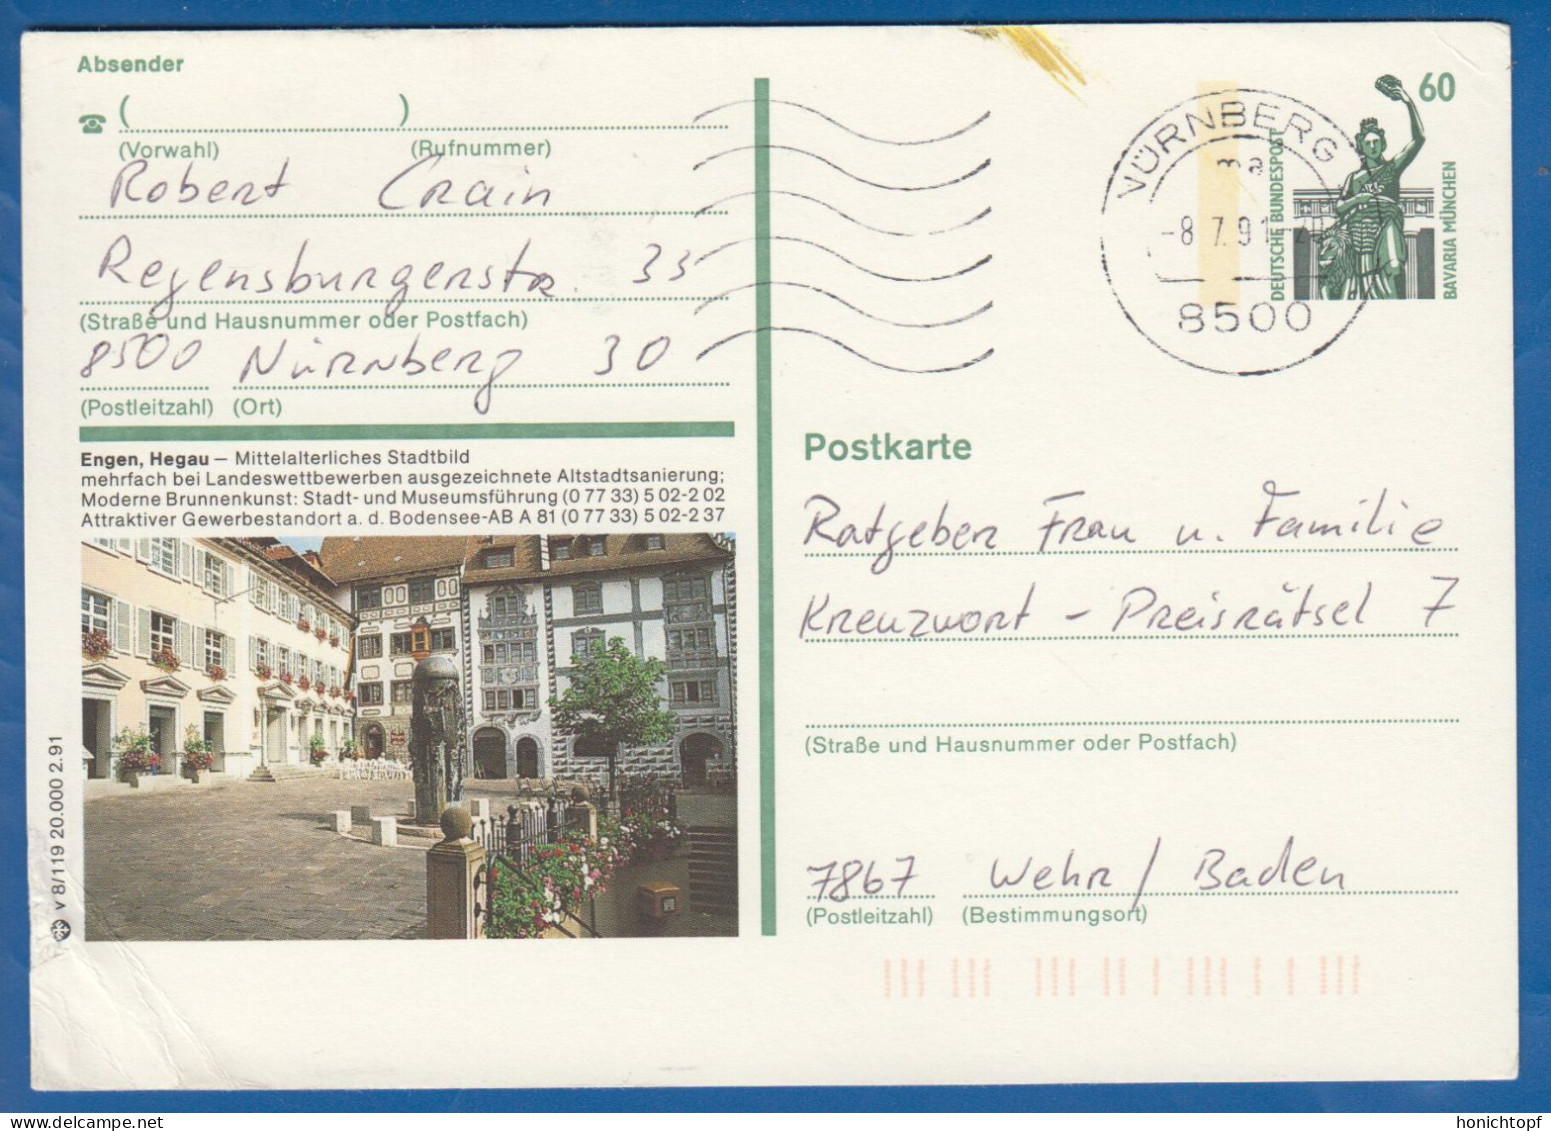 Deutschland; BRD; Postkarte; 60 Pf Bavaria München; Engen, Hegau - Cartes Postales Illustrées - Oblitérées